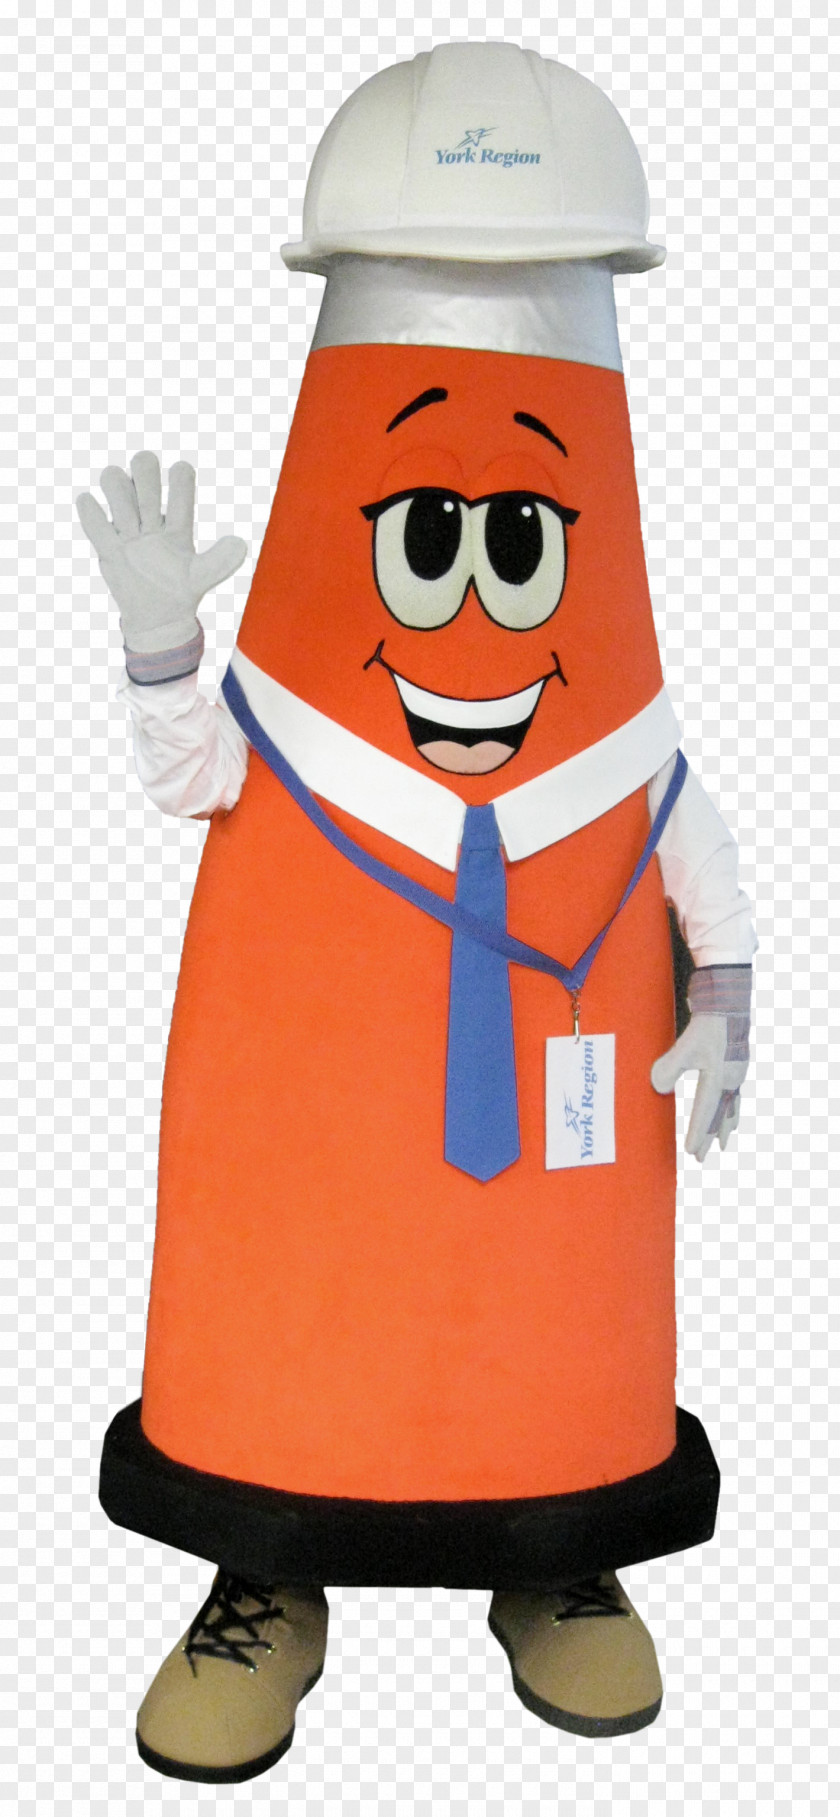 Pylon Regional Municipality Of York Costume Mascot FlingOS Hydrant PNG